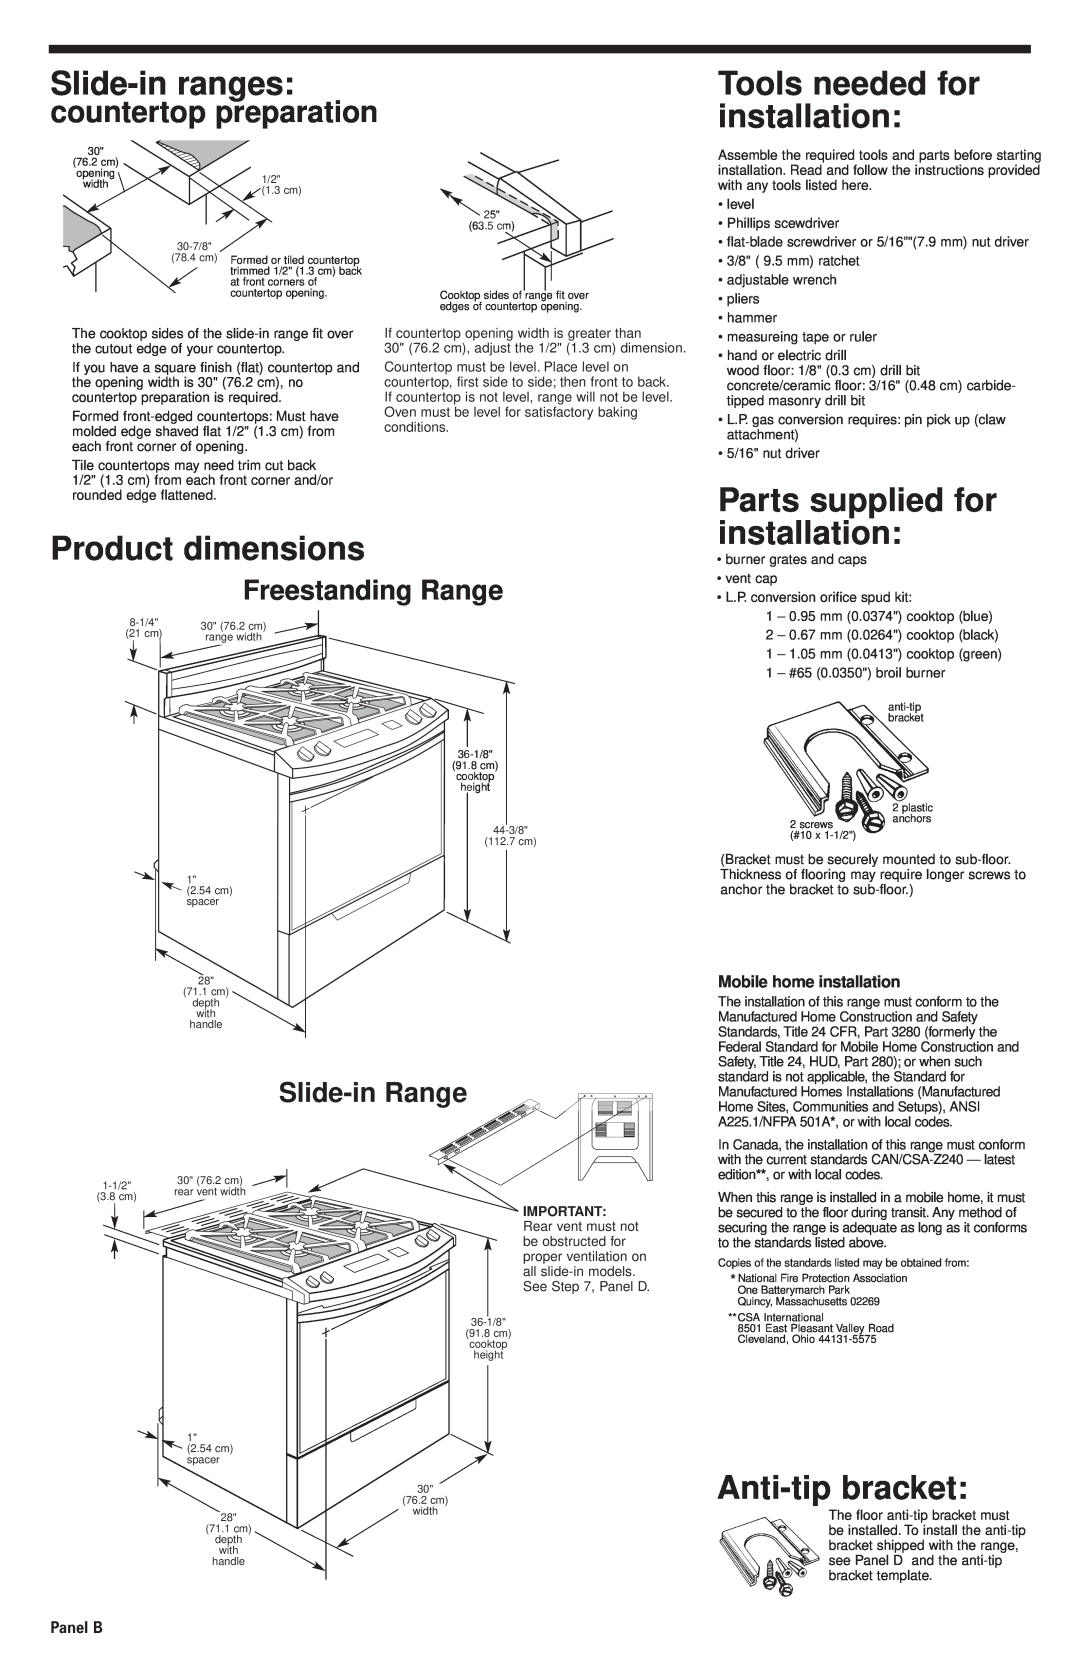 KitchenAid 30" (76.2 cm) Slide-inranges, Tools needed for installation, Product dimensions, Anti-tipbracket, Panel B 